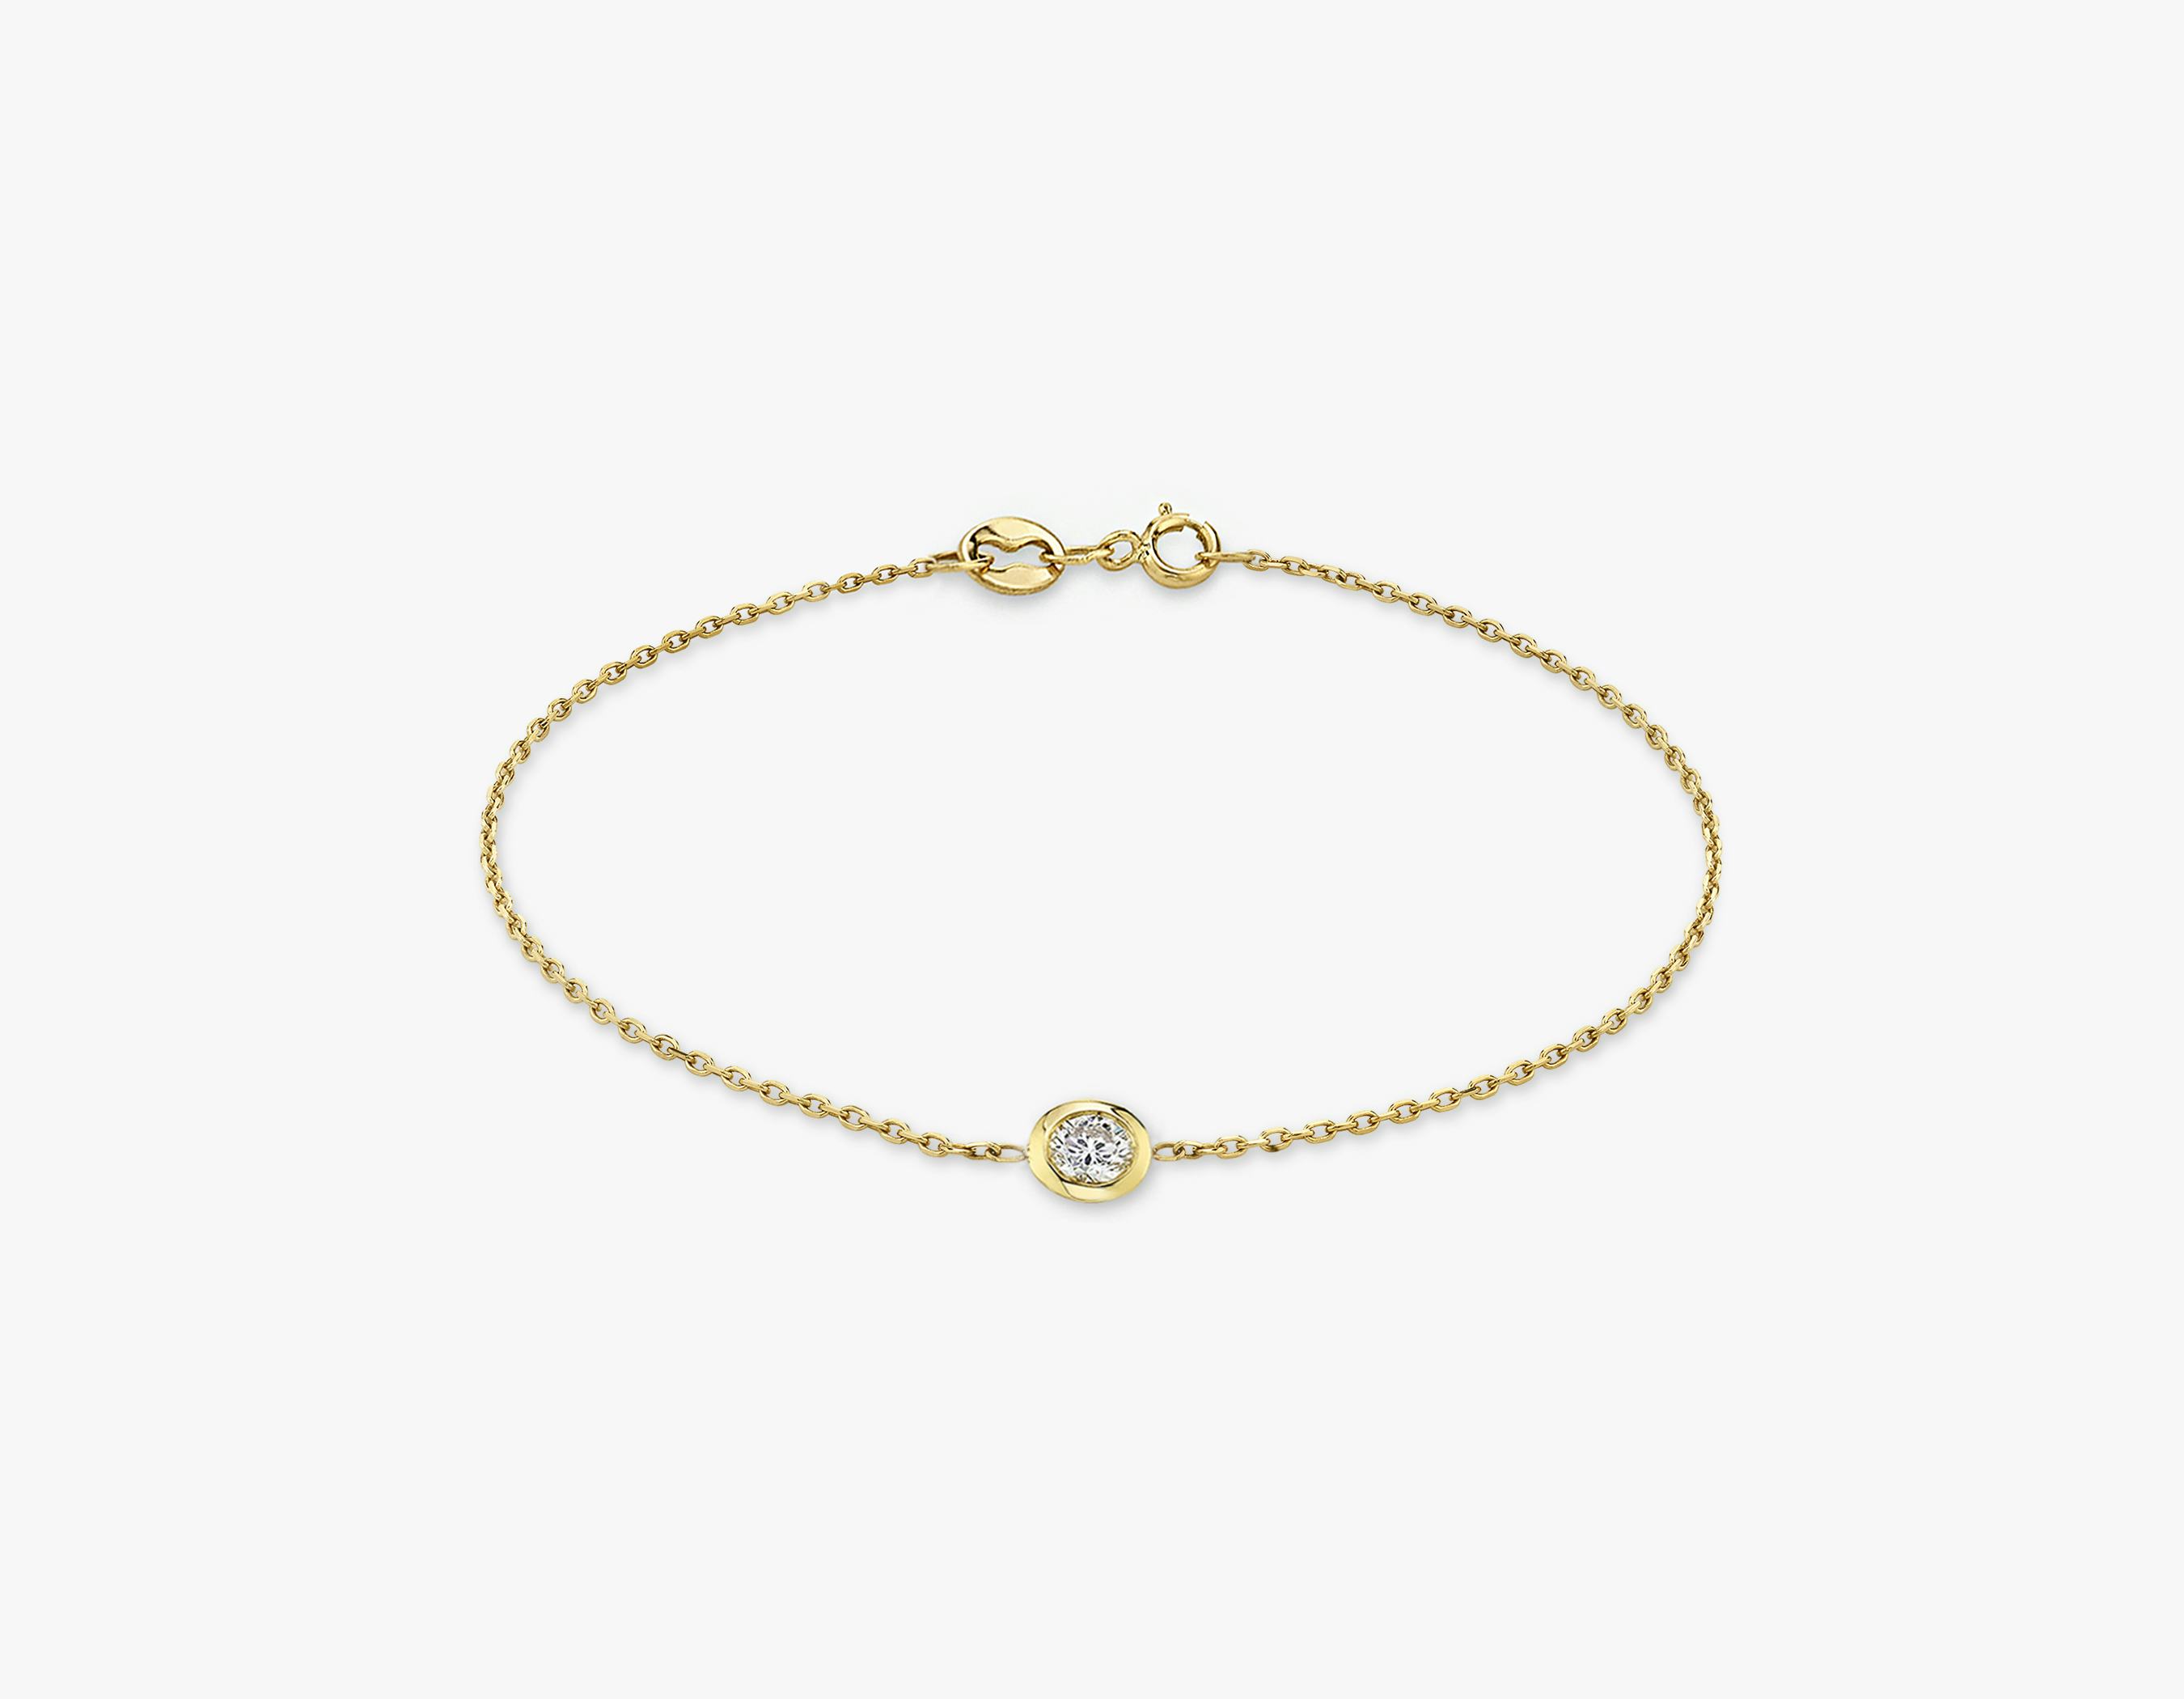 Bezel Set Diamond Bracelet, Cobalt Blue Silk Cord, 14K Yellow Gold Vermeil